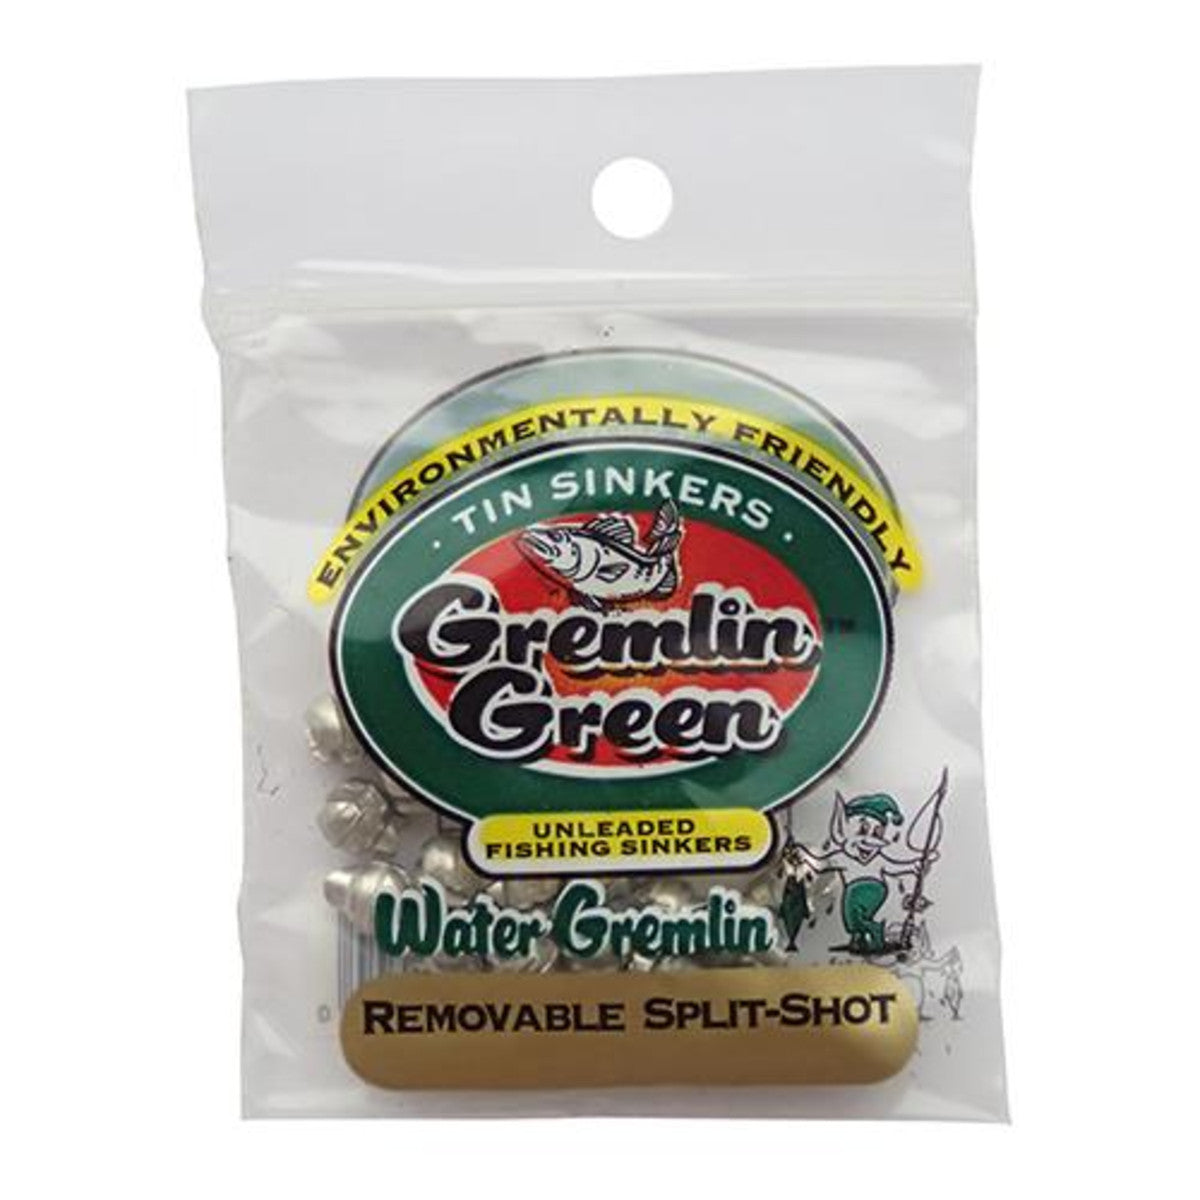 Water Gremlin Green Removable Tin Split Shot Bb